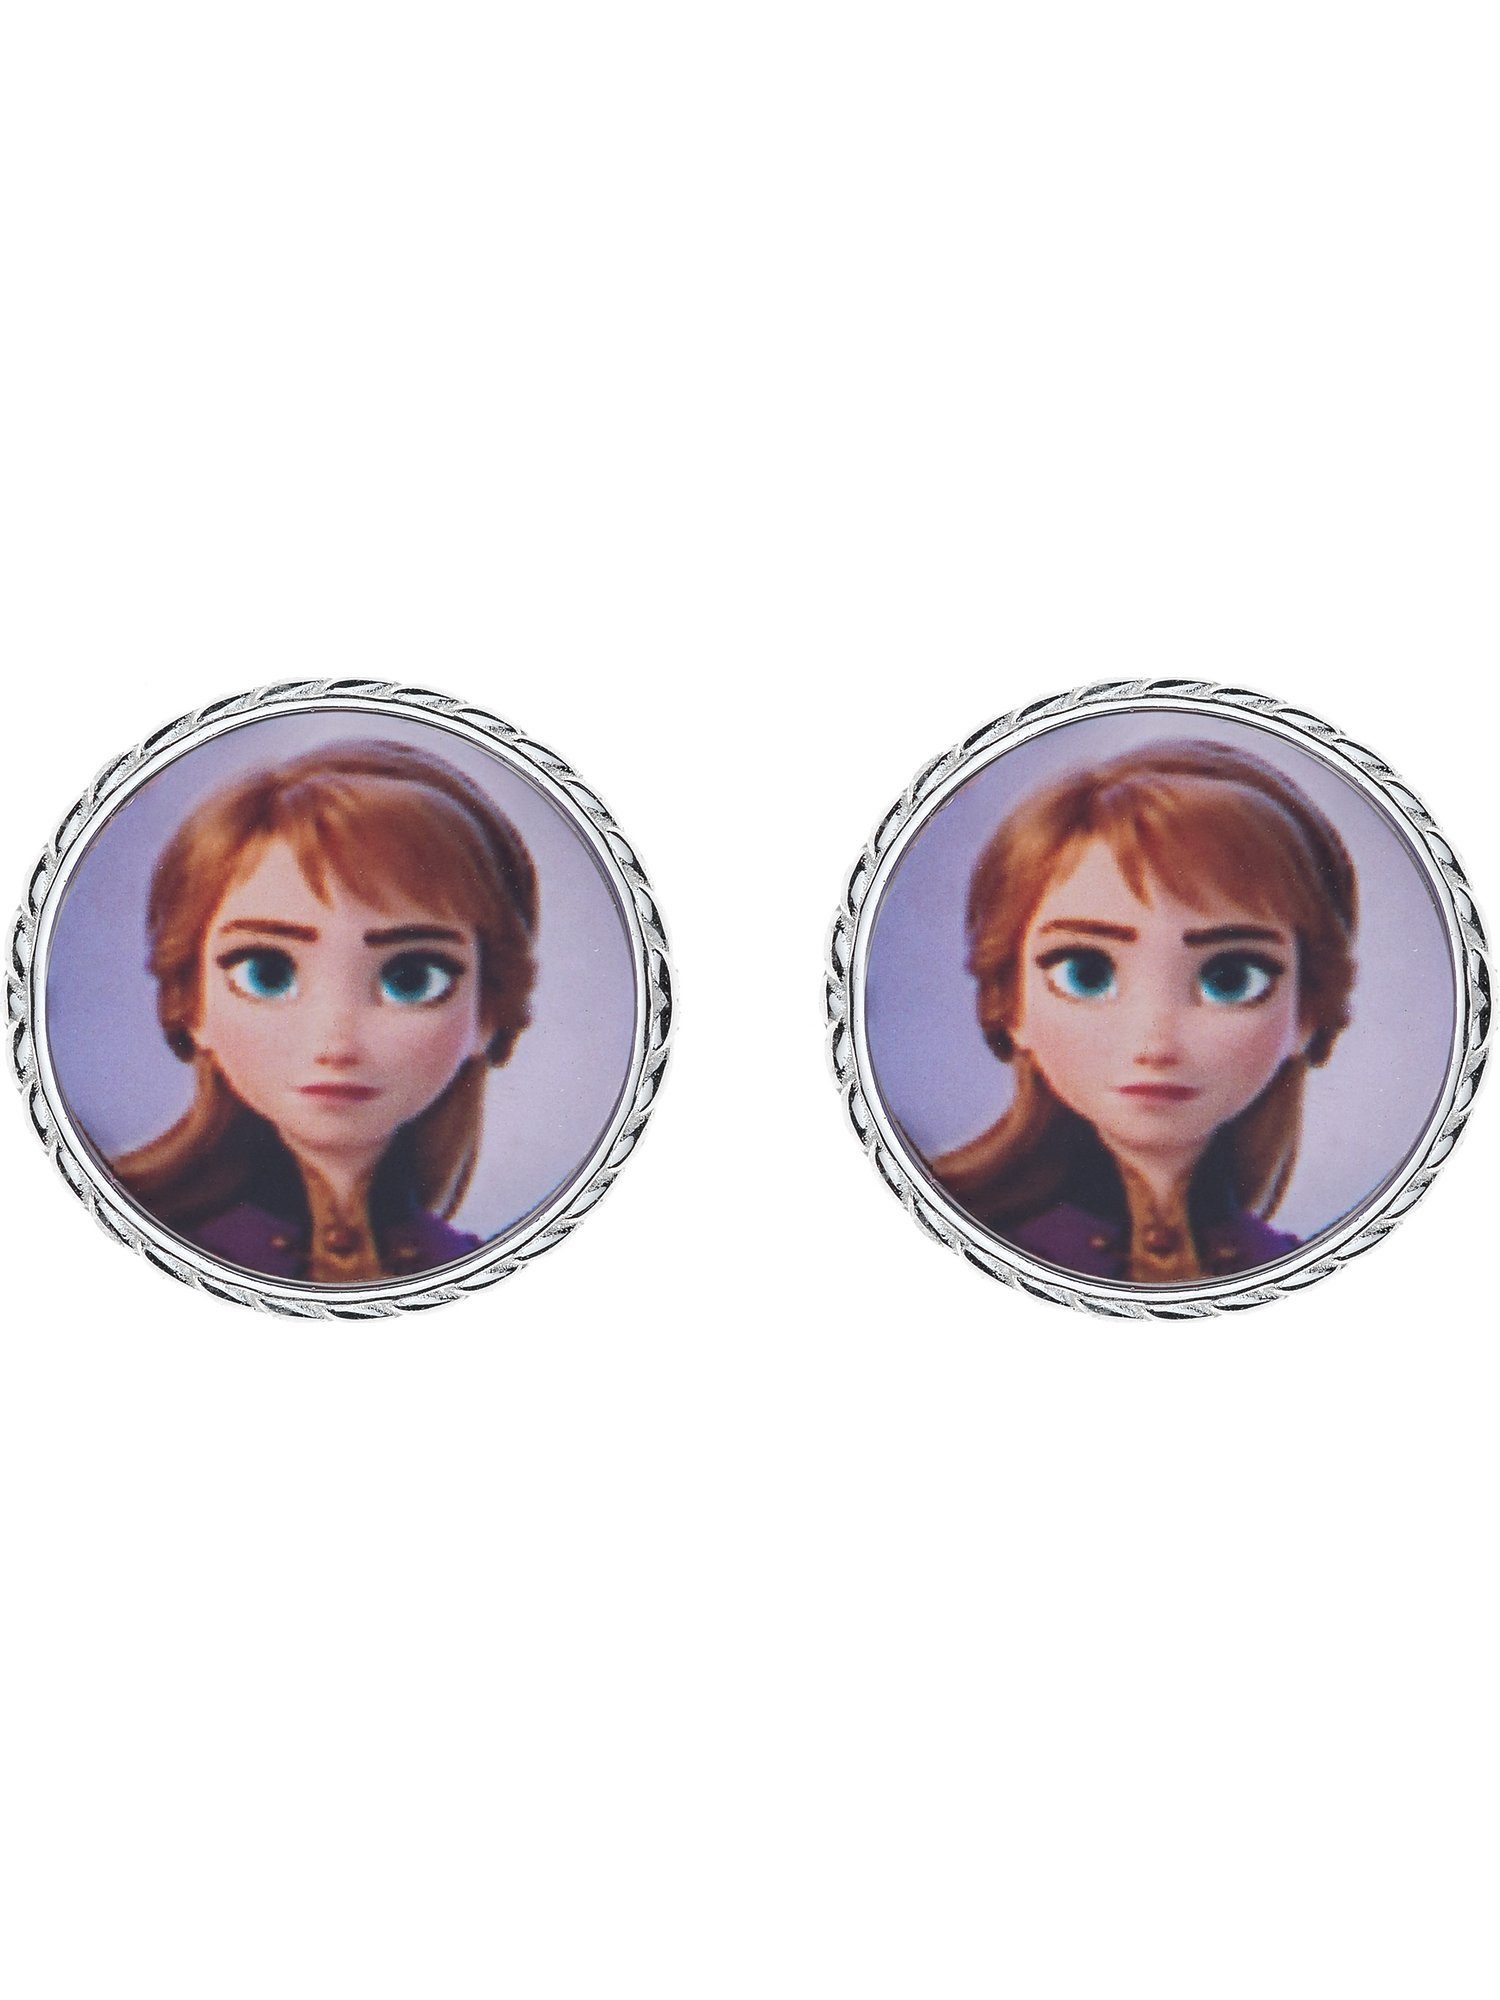 DISNEY Jewelry Paar Ohrhänger Disney Mädchen-Kinderohrring 925er Silber